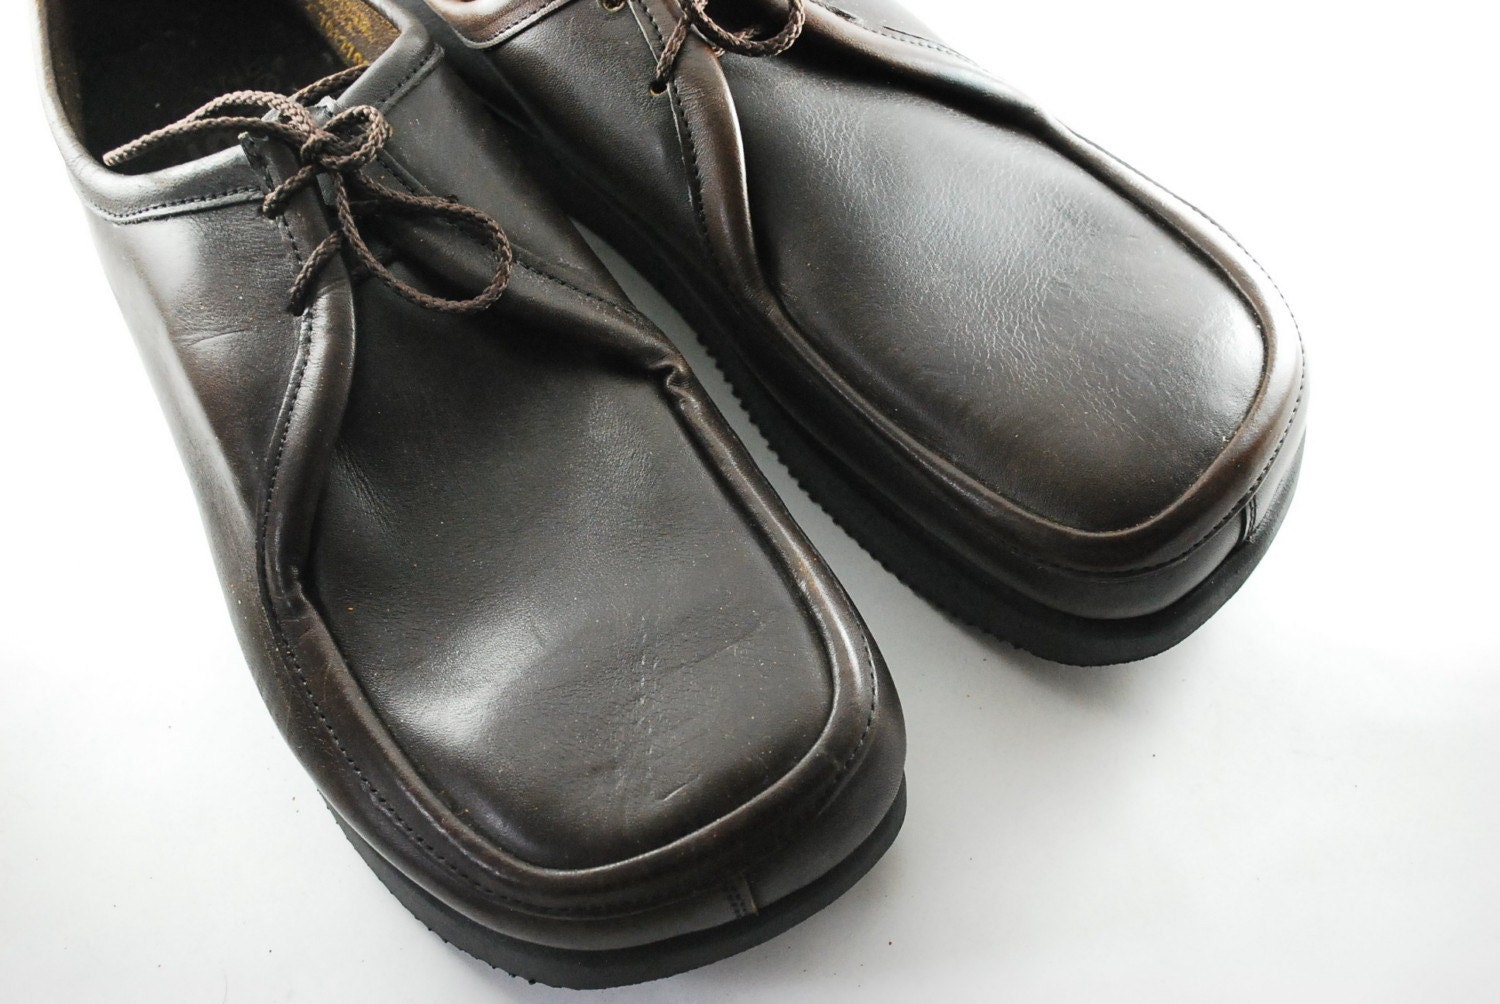 NOS Vintage Men's Anne Kalso Earth Shoes Brown Square Toe